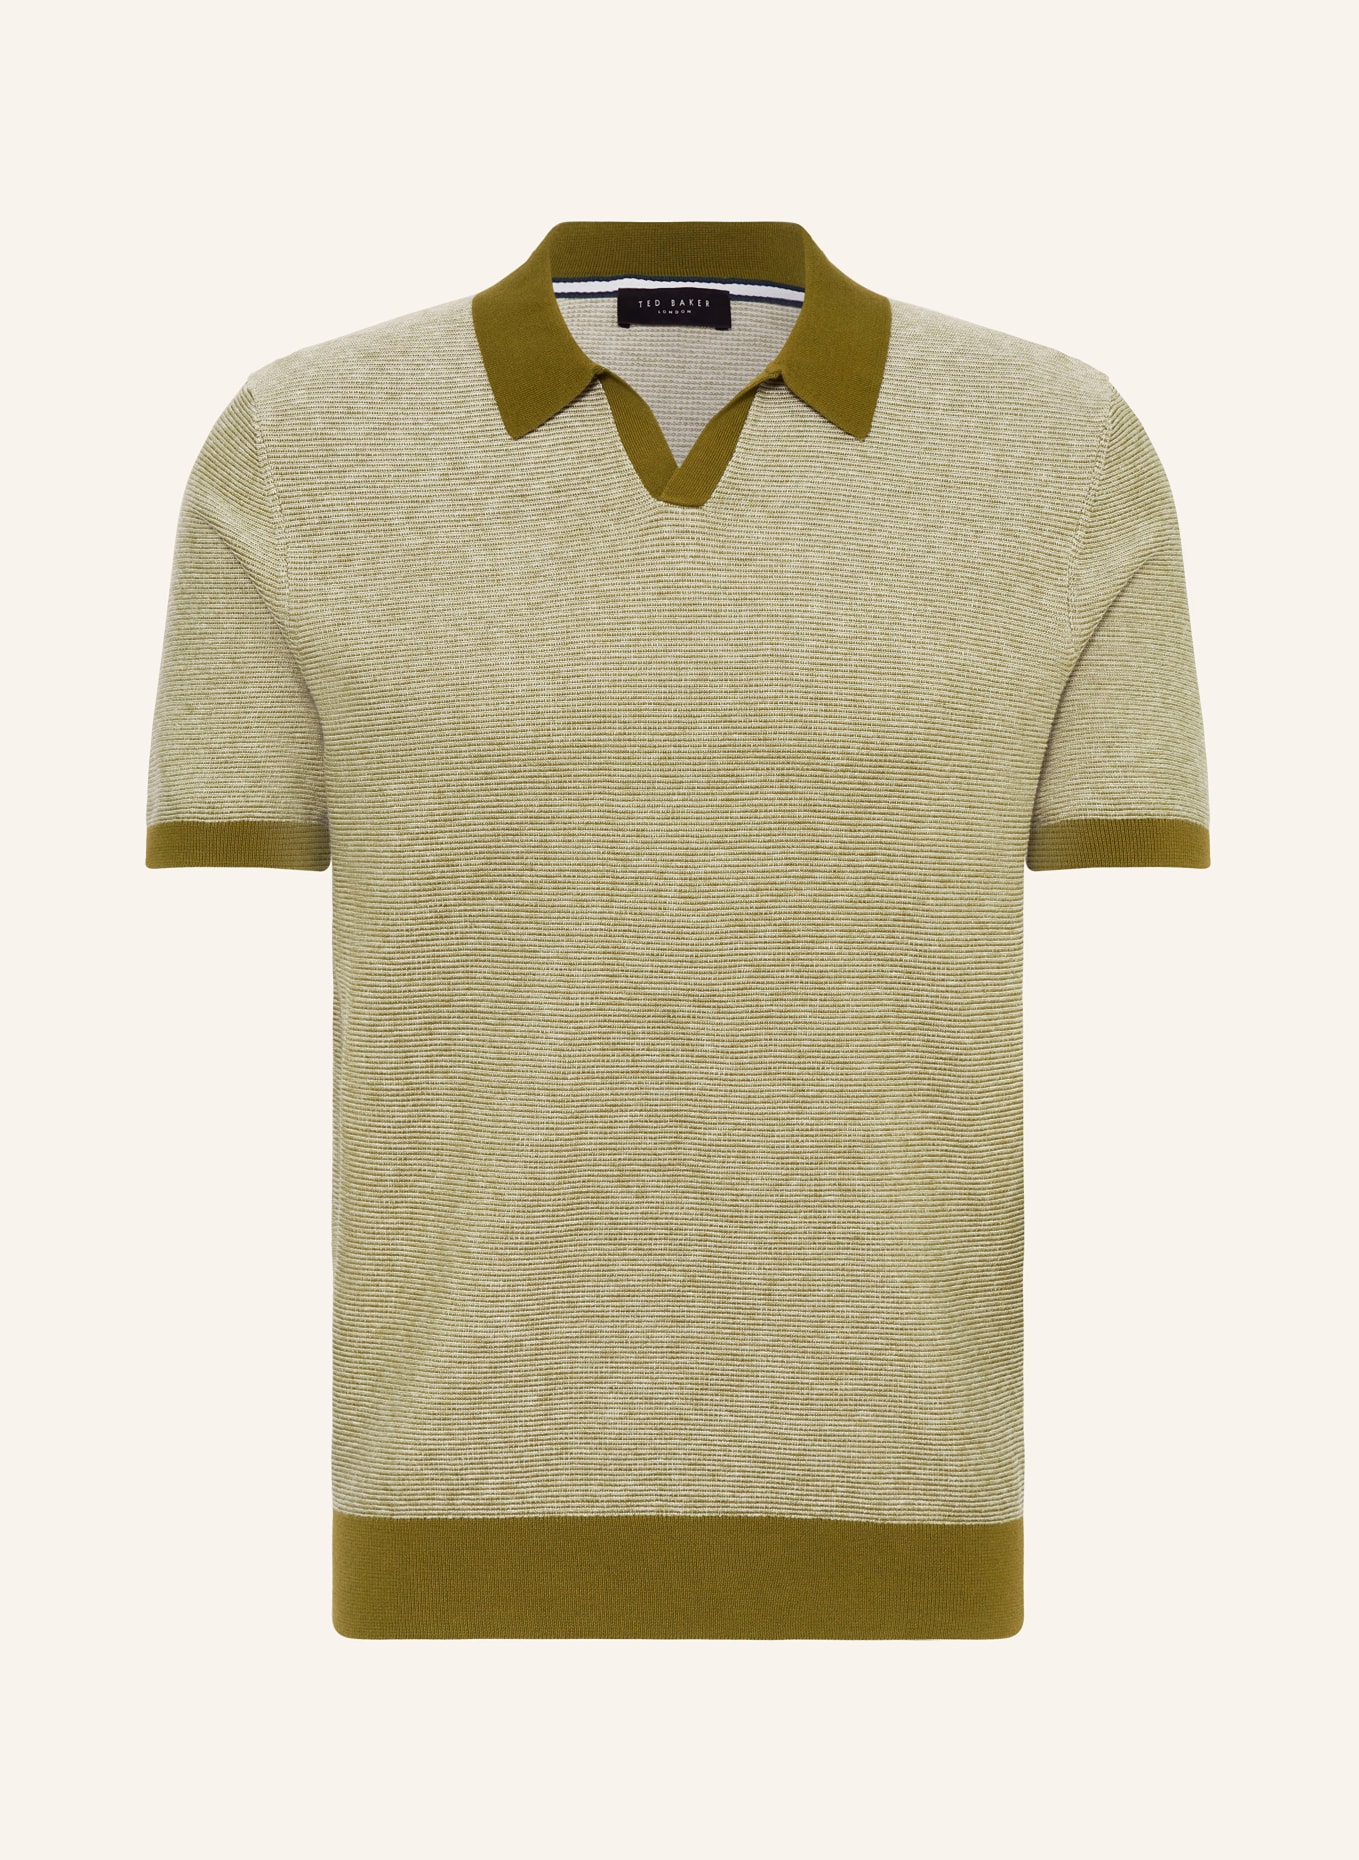 TED BAKER Strick-Poloshirt WULDER, Farbe: OLIV (Bild 1)